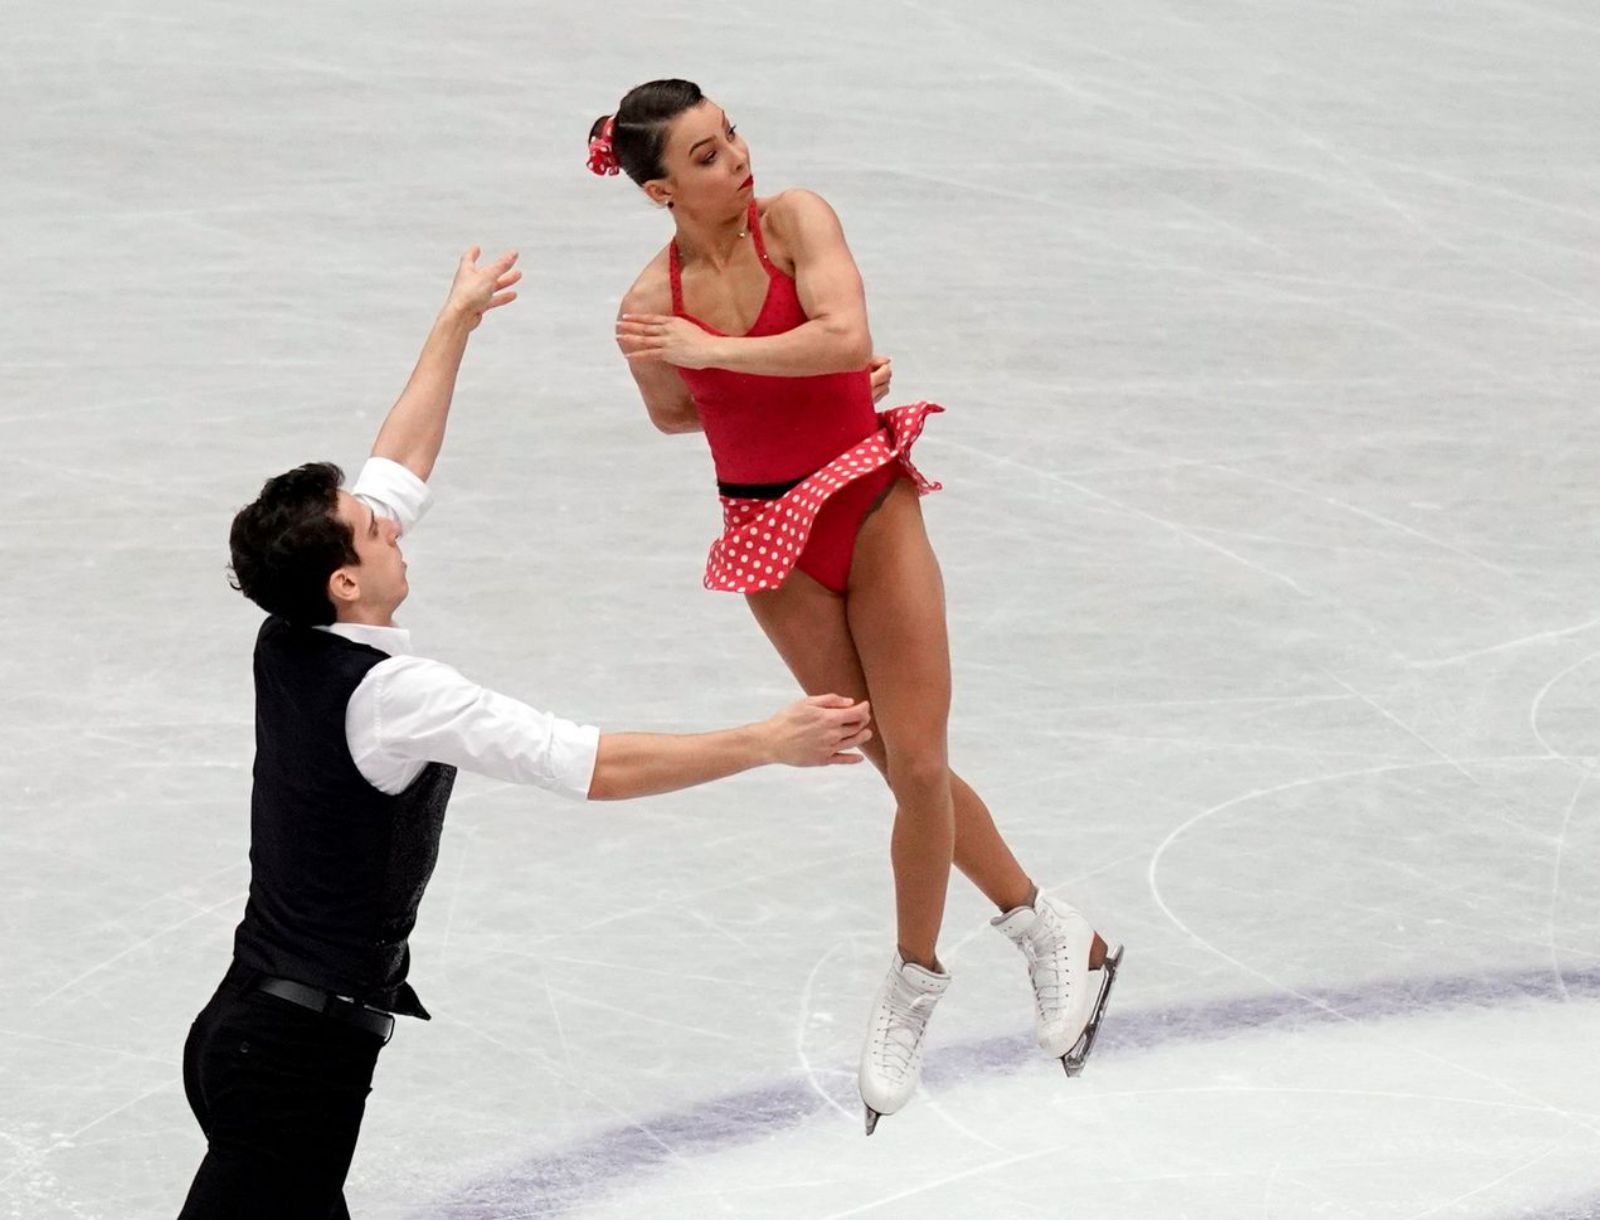 „El patinaje artístico“ ist „Eiskunstlauf“ („sobre hielo“) oder „Rollkunstlauf“ („sobre ruedas“).